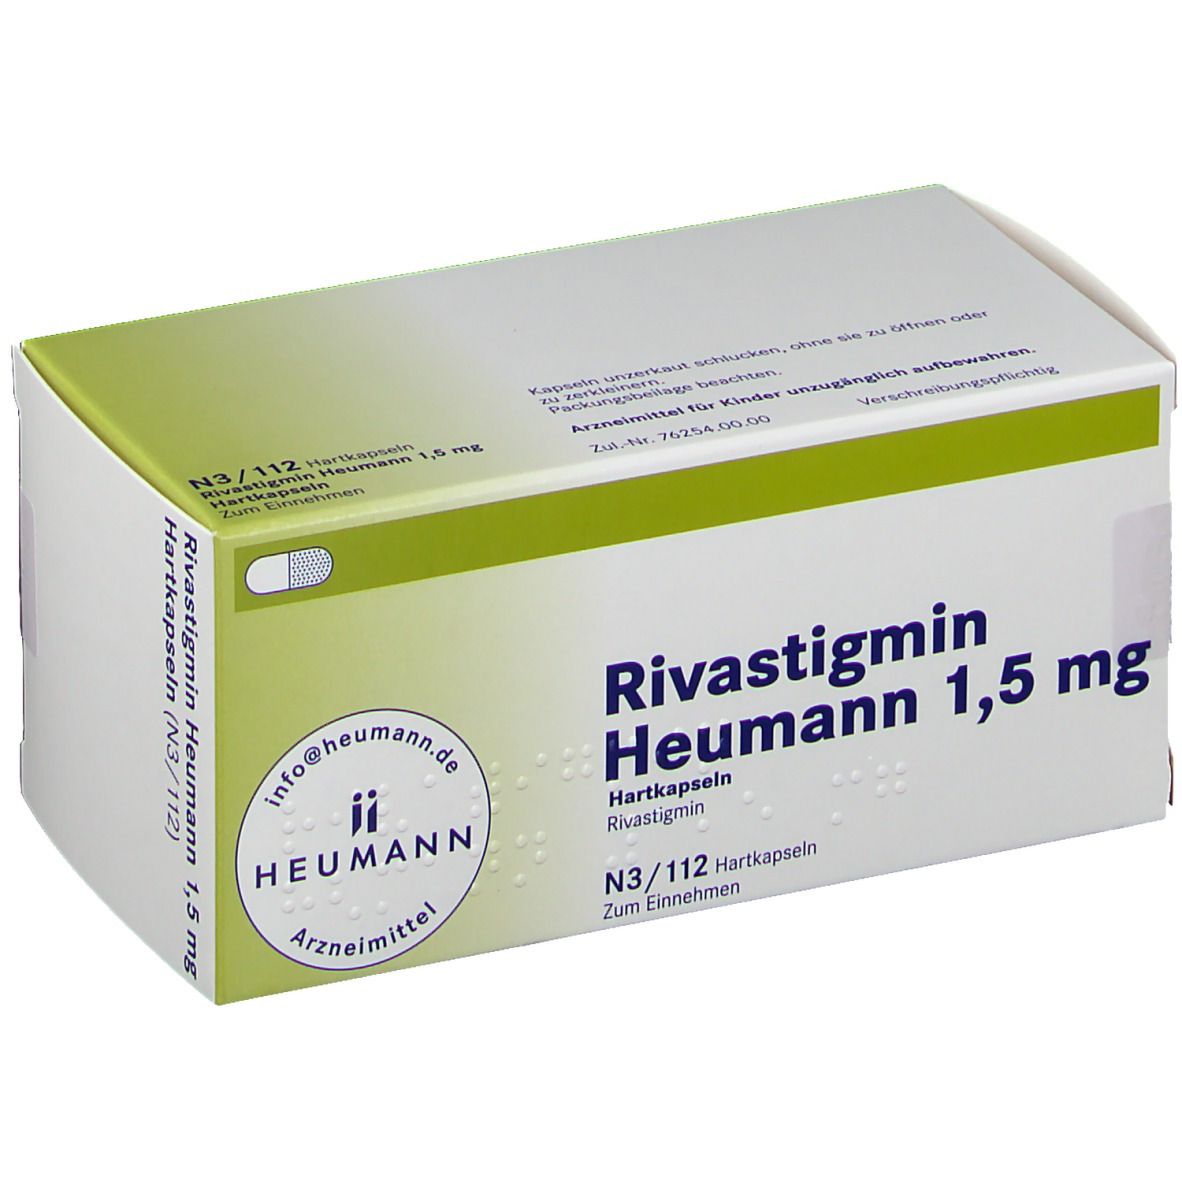 Rivastigmin Heumann 1,5 mg